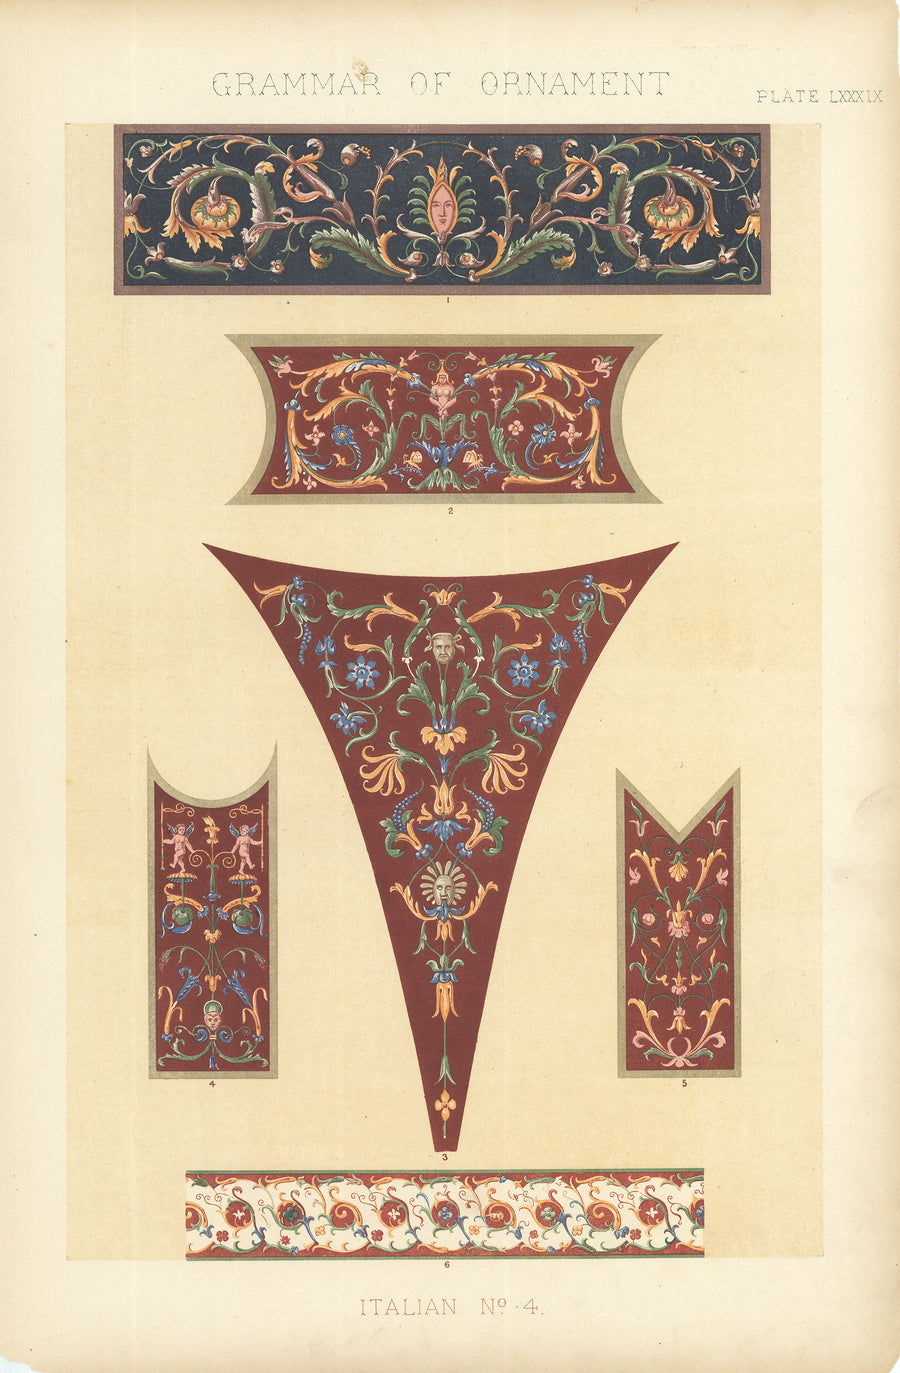 Antique Lithograph Print: Grammar of Ornament by Owen Jones, 1st edition 1856 - Italian No.4, Plate LXXXIX